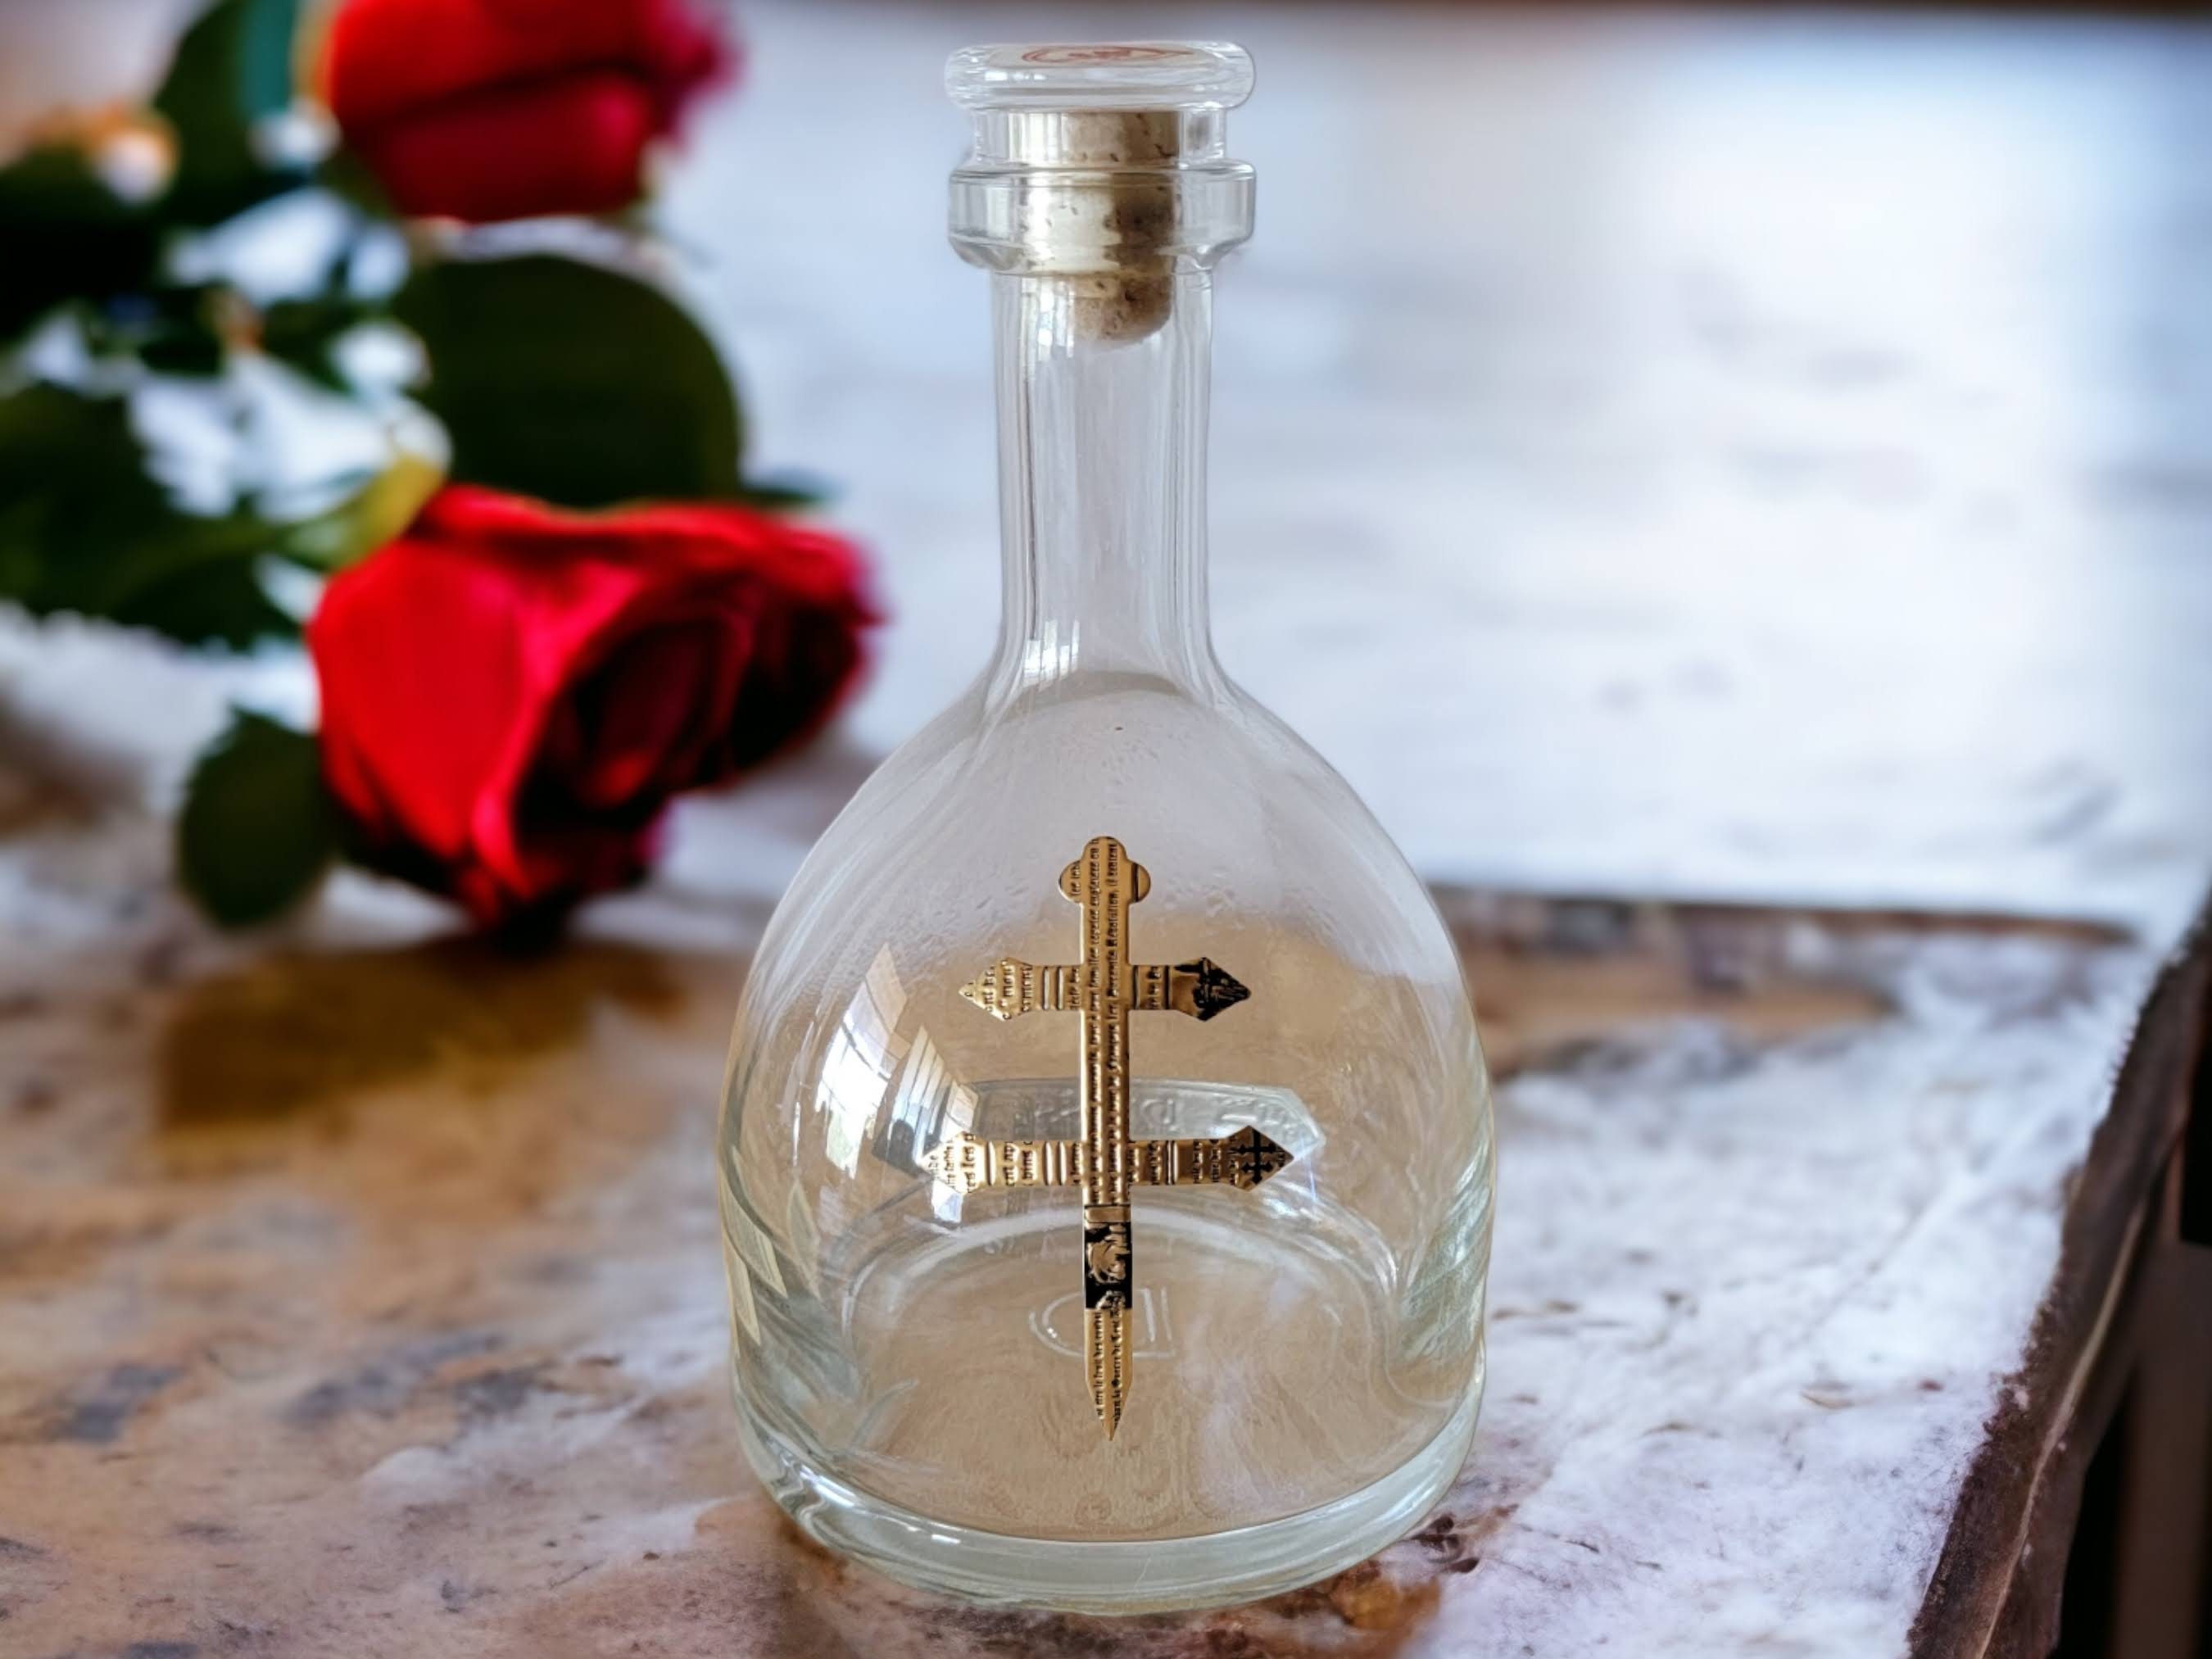 remy martin louis xiii cognac decanter empty bottle box